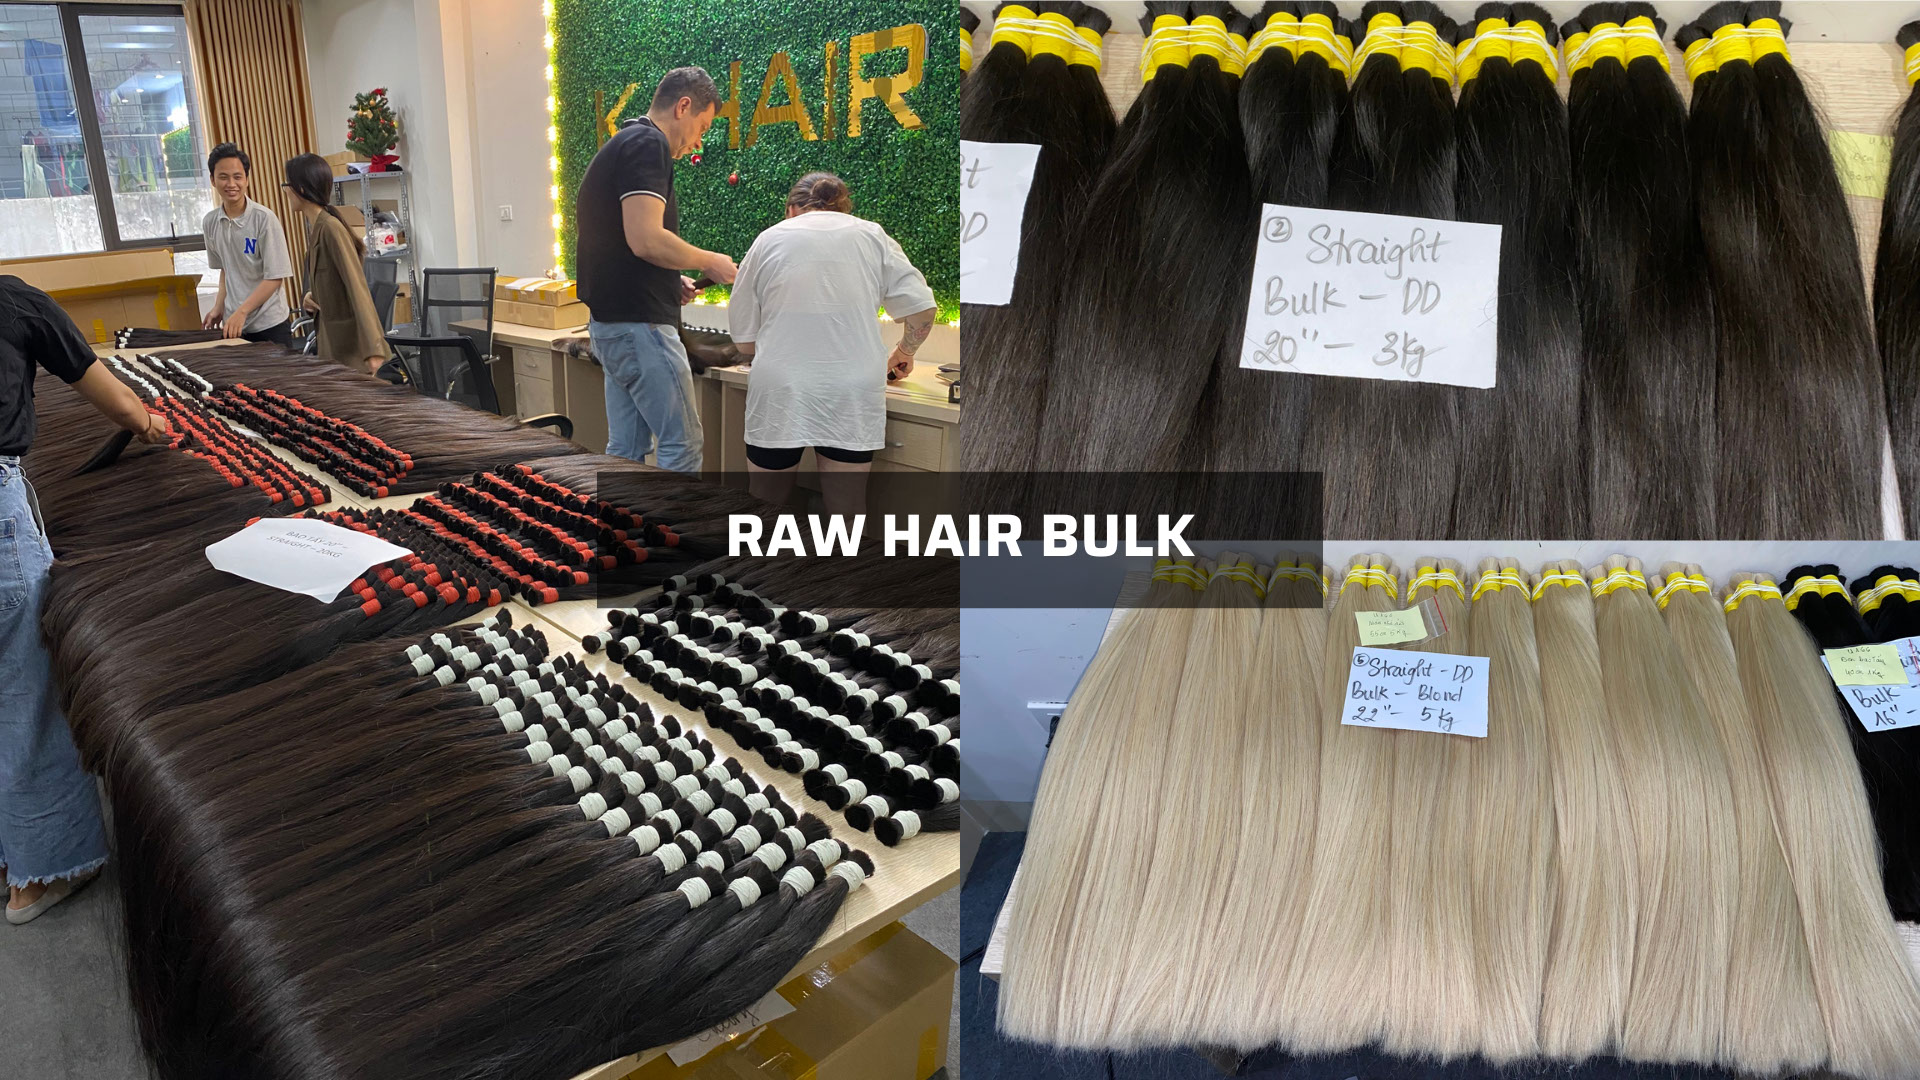 Raw hair bulk from wholesale hair suppliers